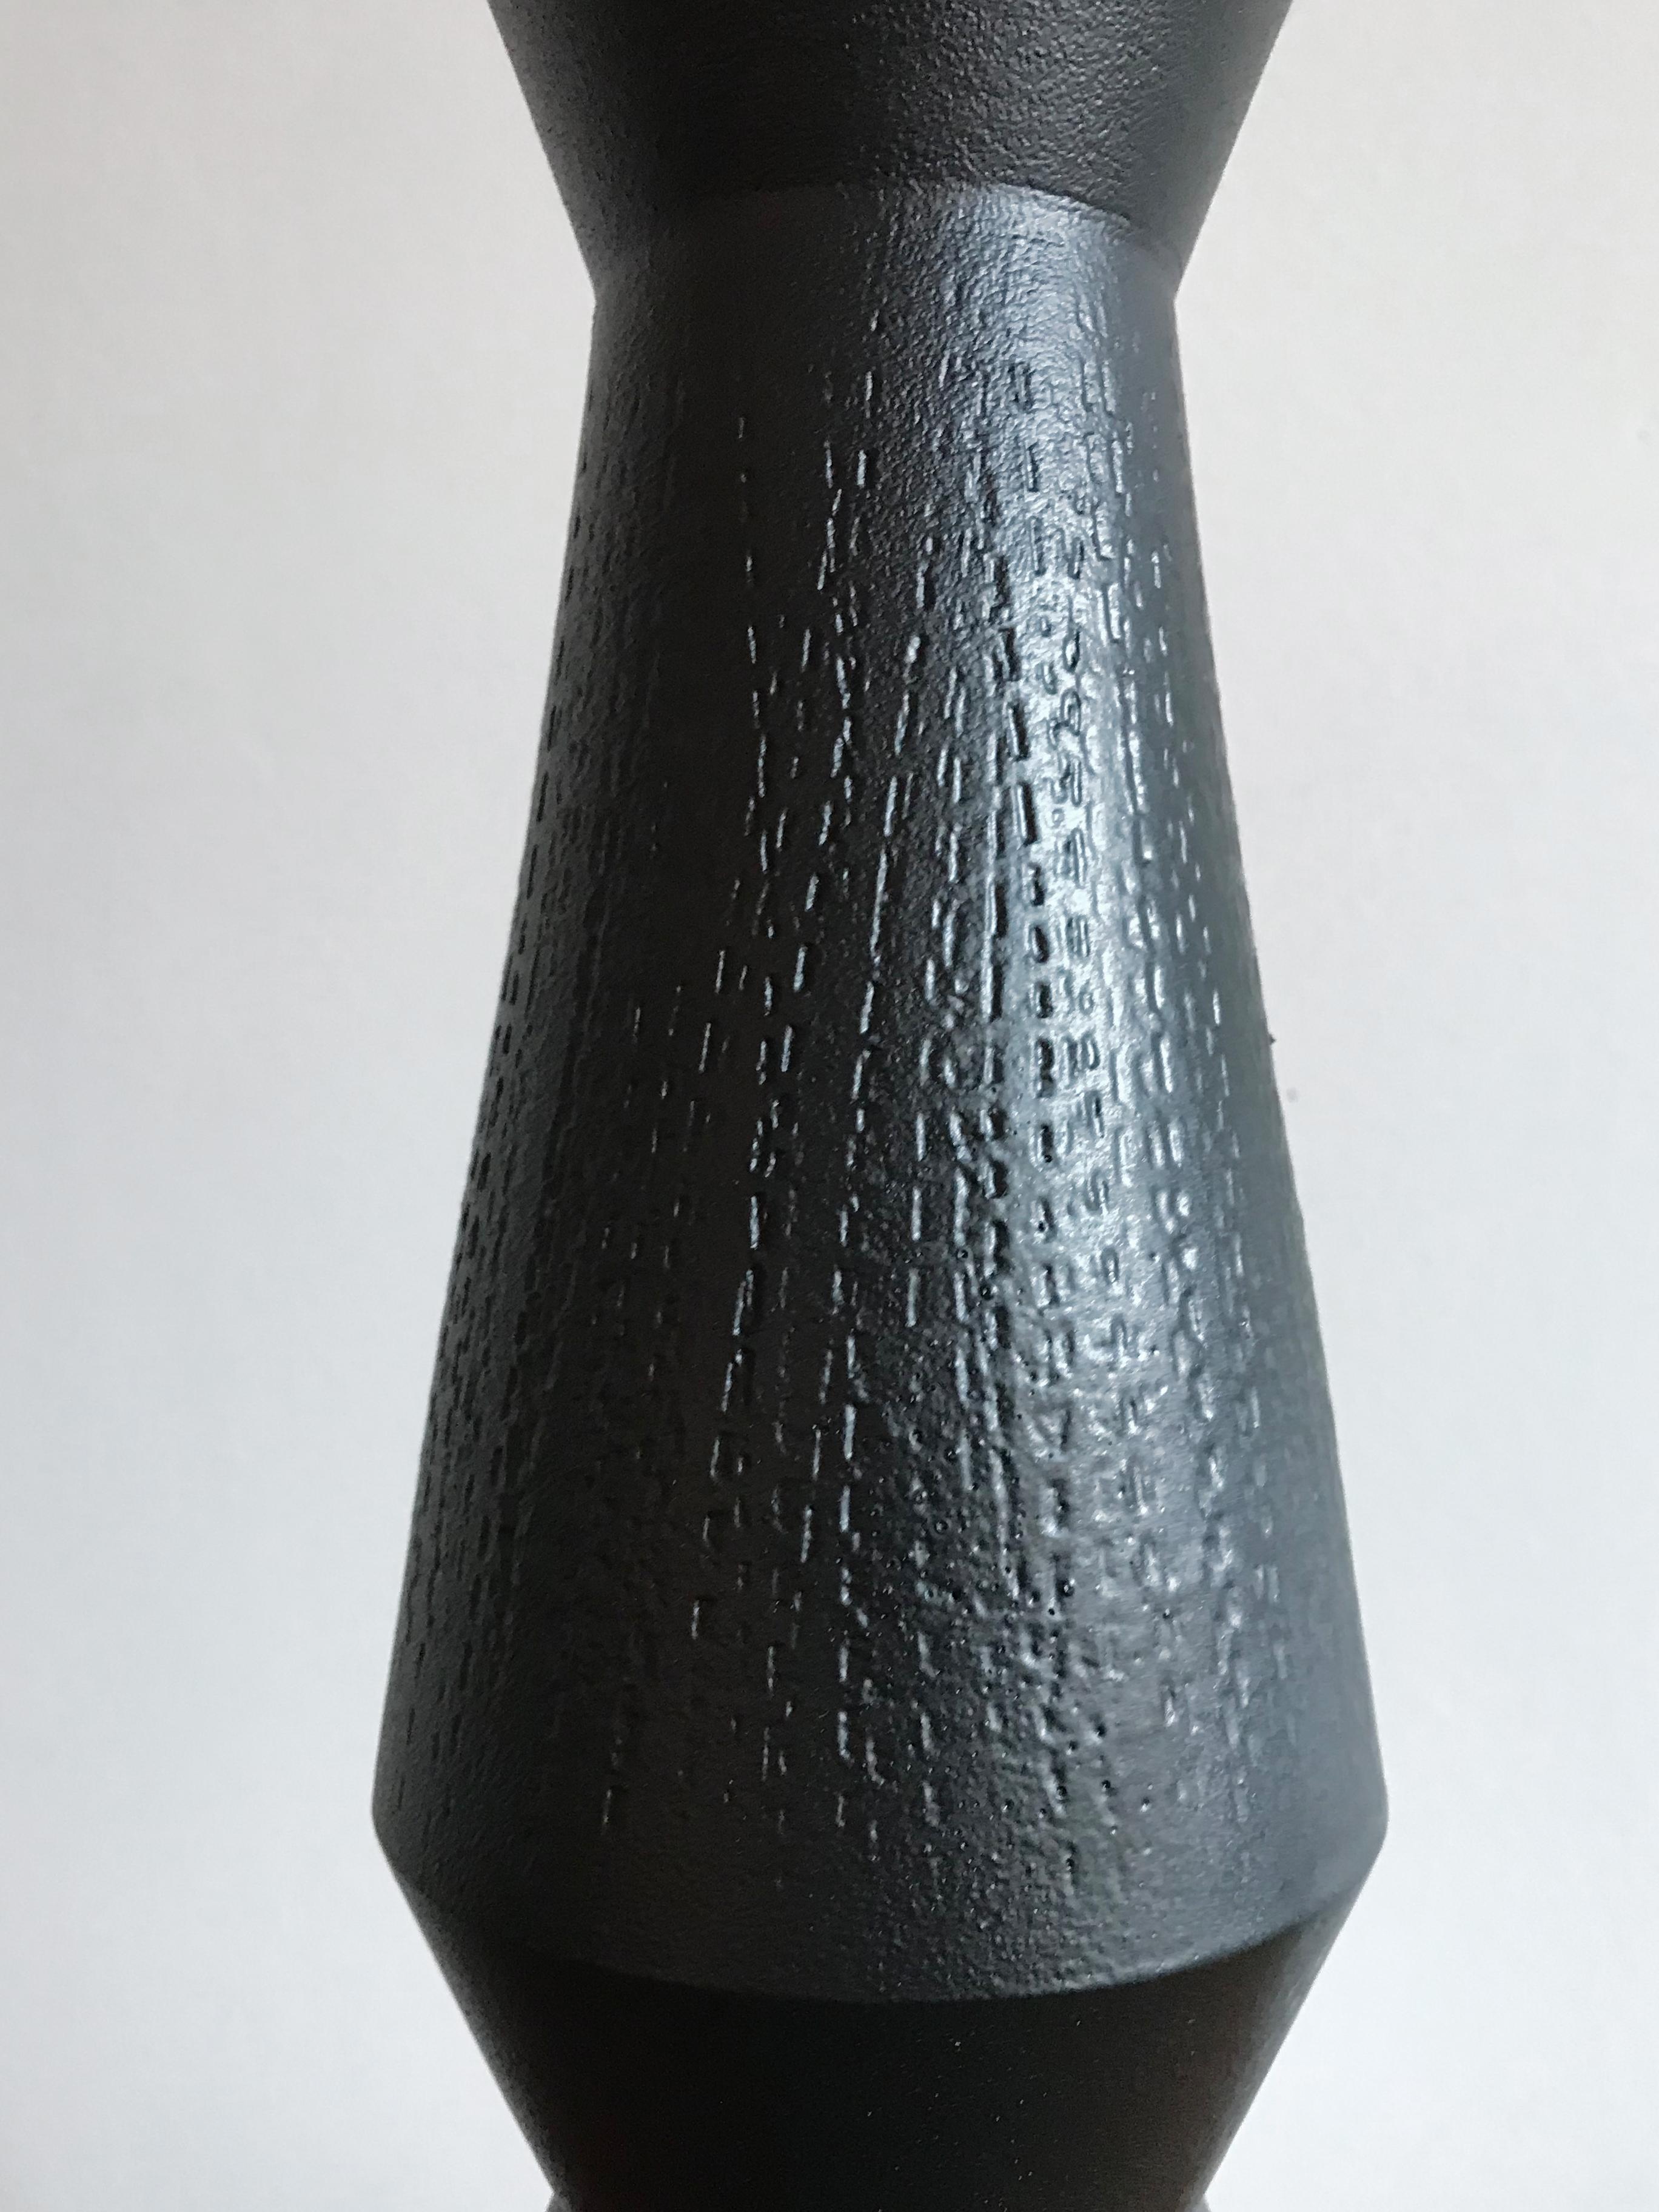 Italian Contemporary Ceramic Vase Designed by Capperidicasa, Made in Italy